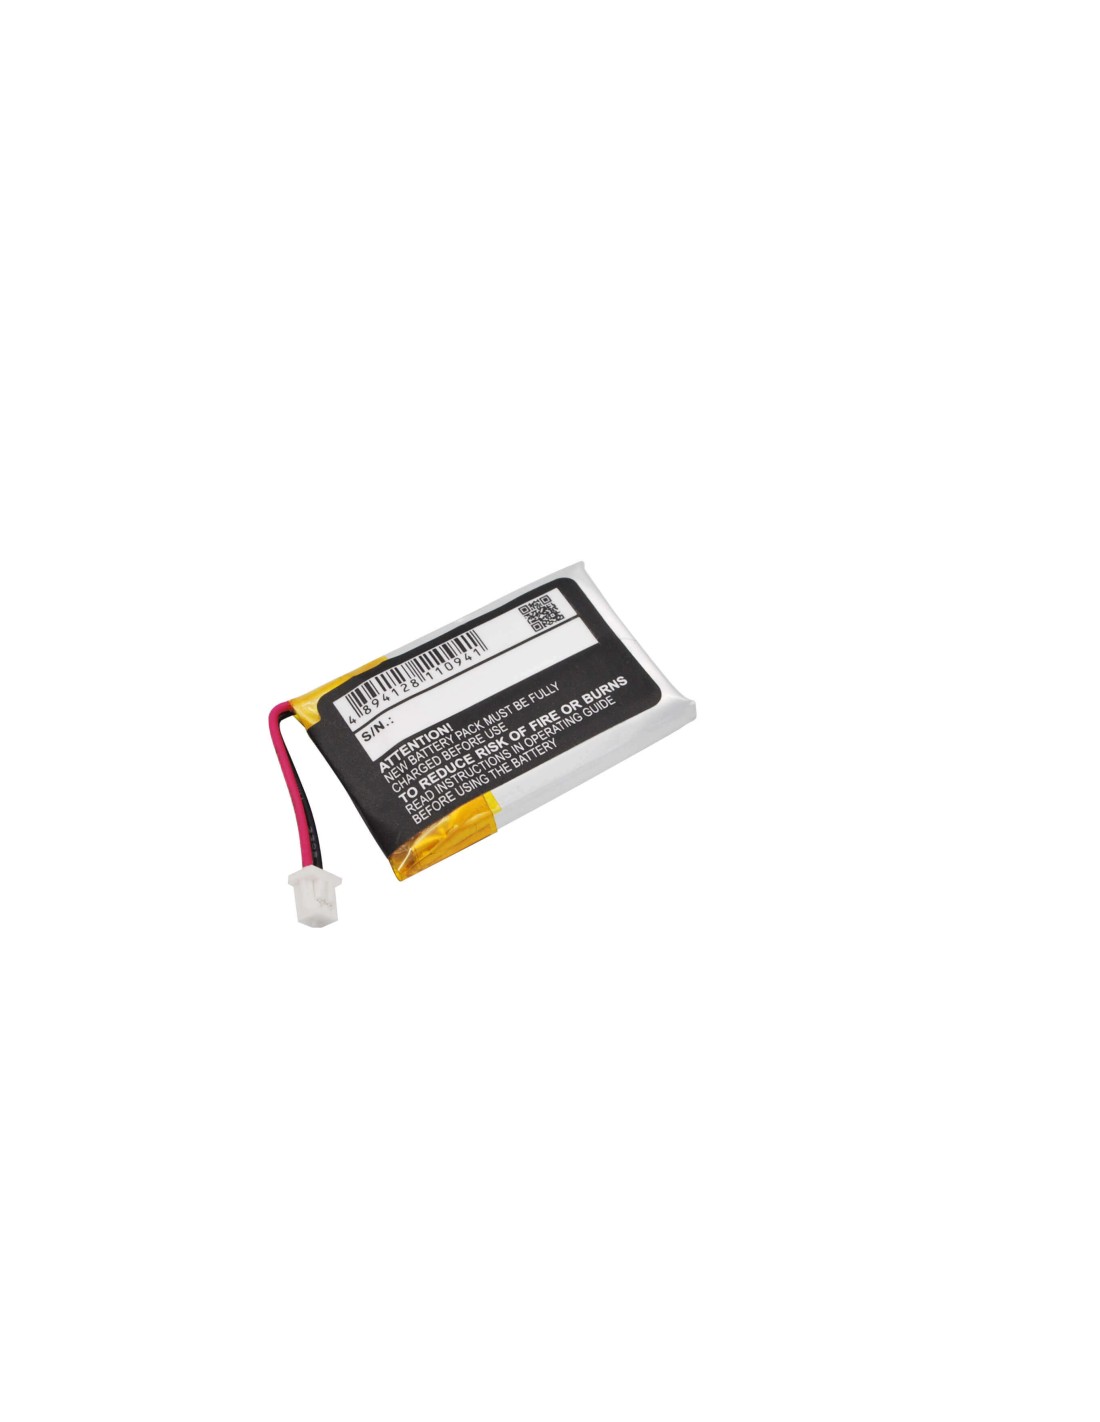 Battery for Plantronics Cs60, Hl10 3.7V, 180mAh - 0.67Wh